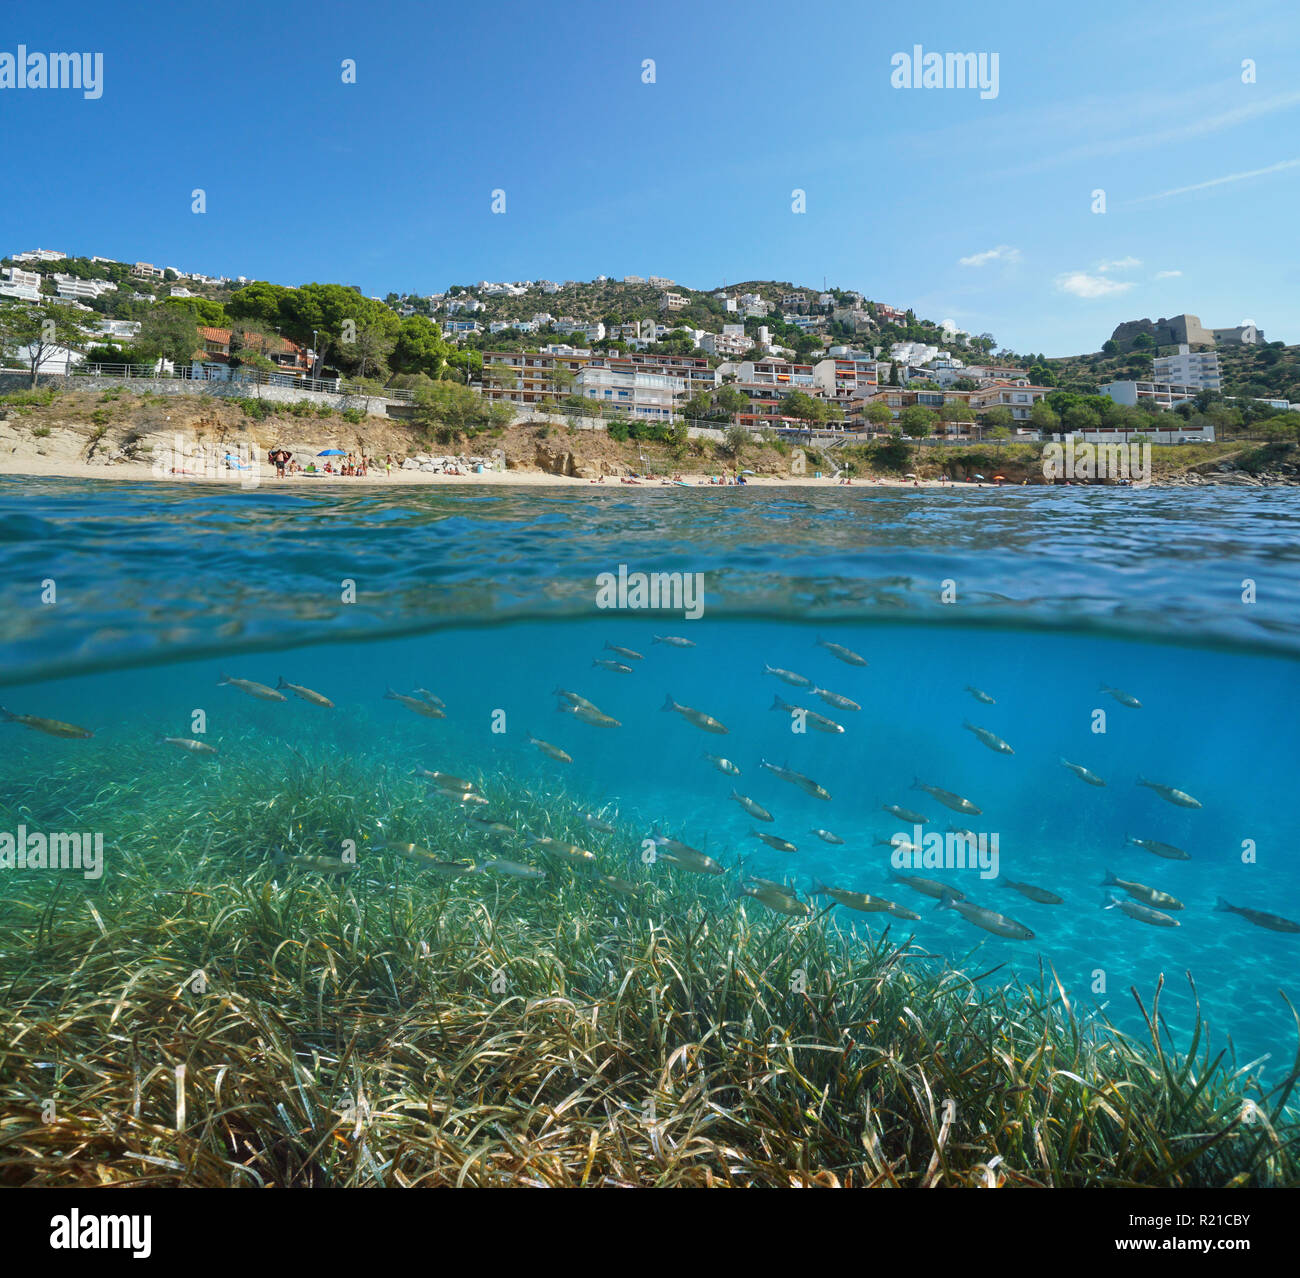 School of fish underwater in the Mediterranean sea Tote Bag for